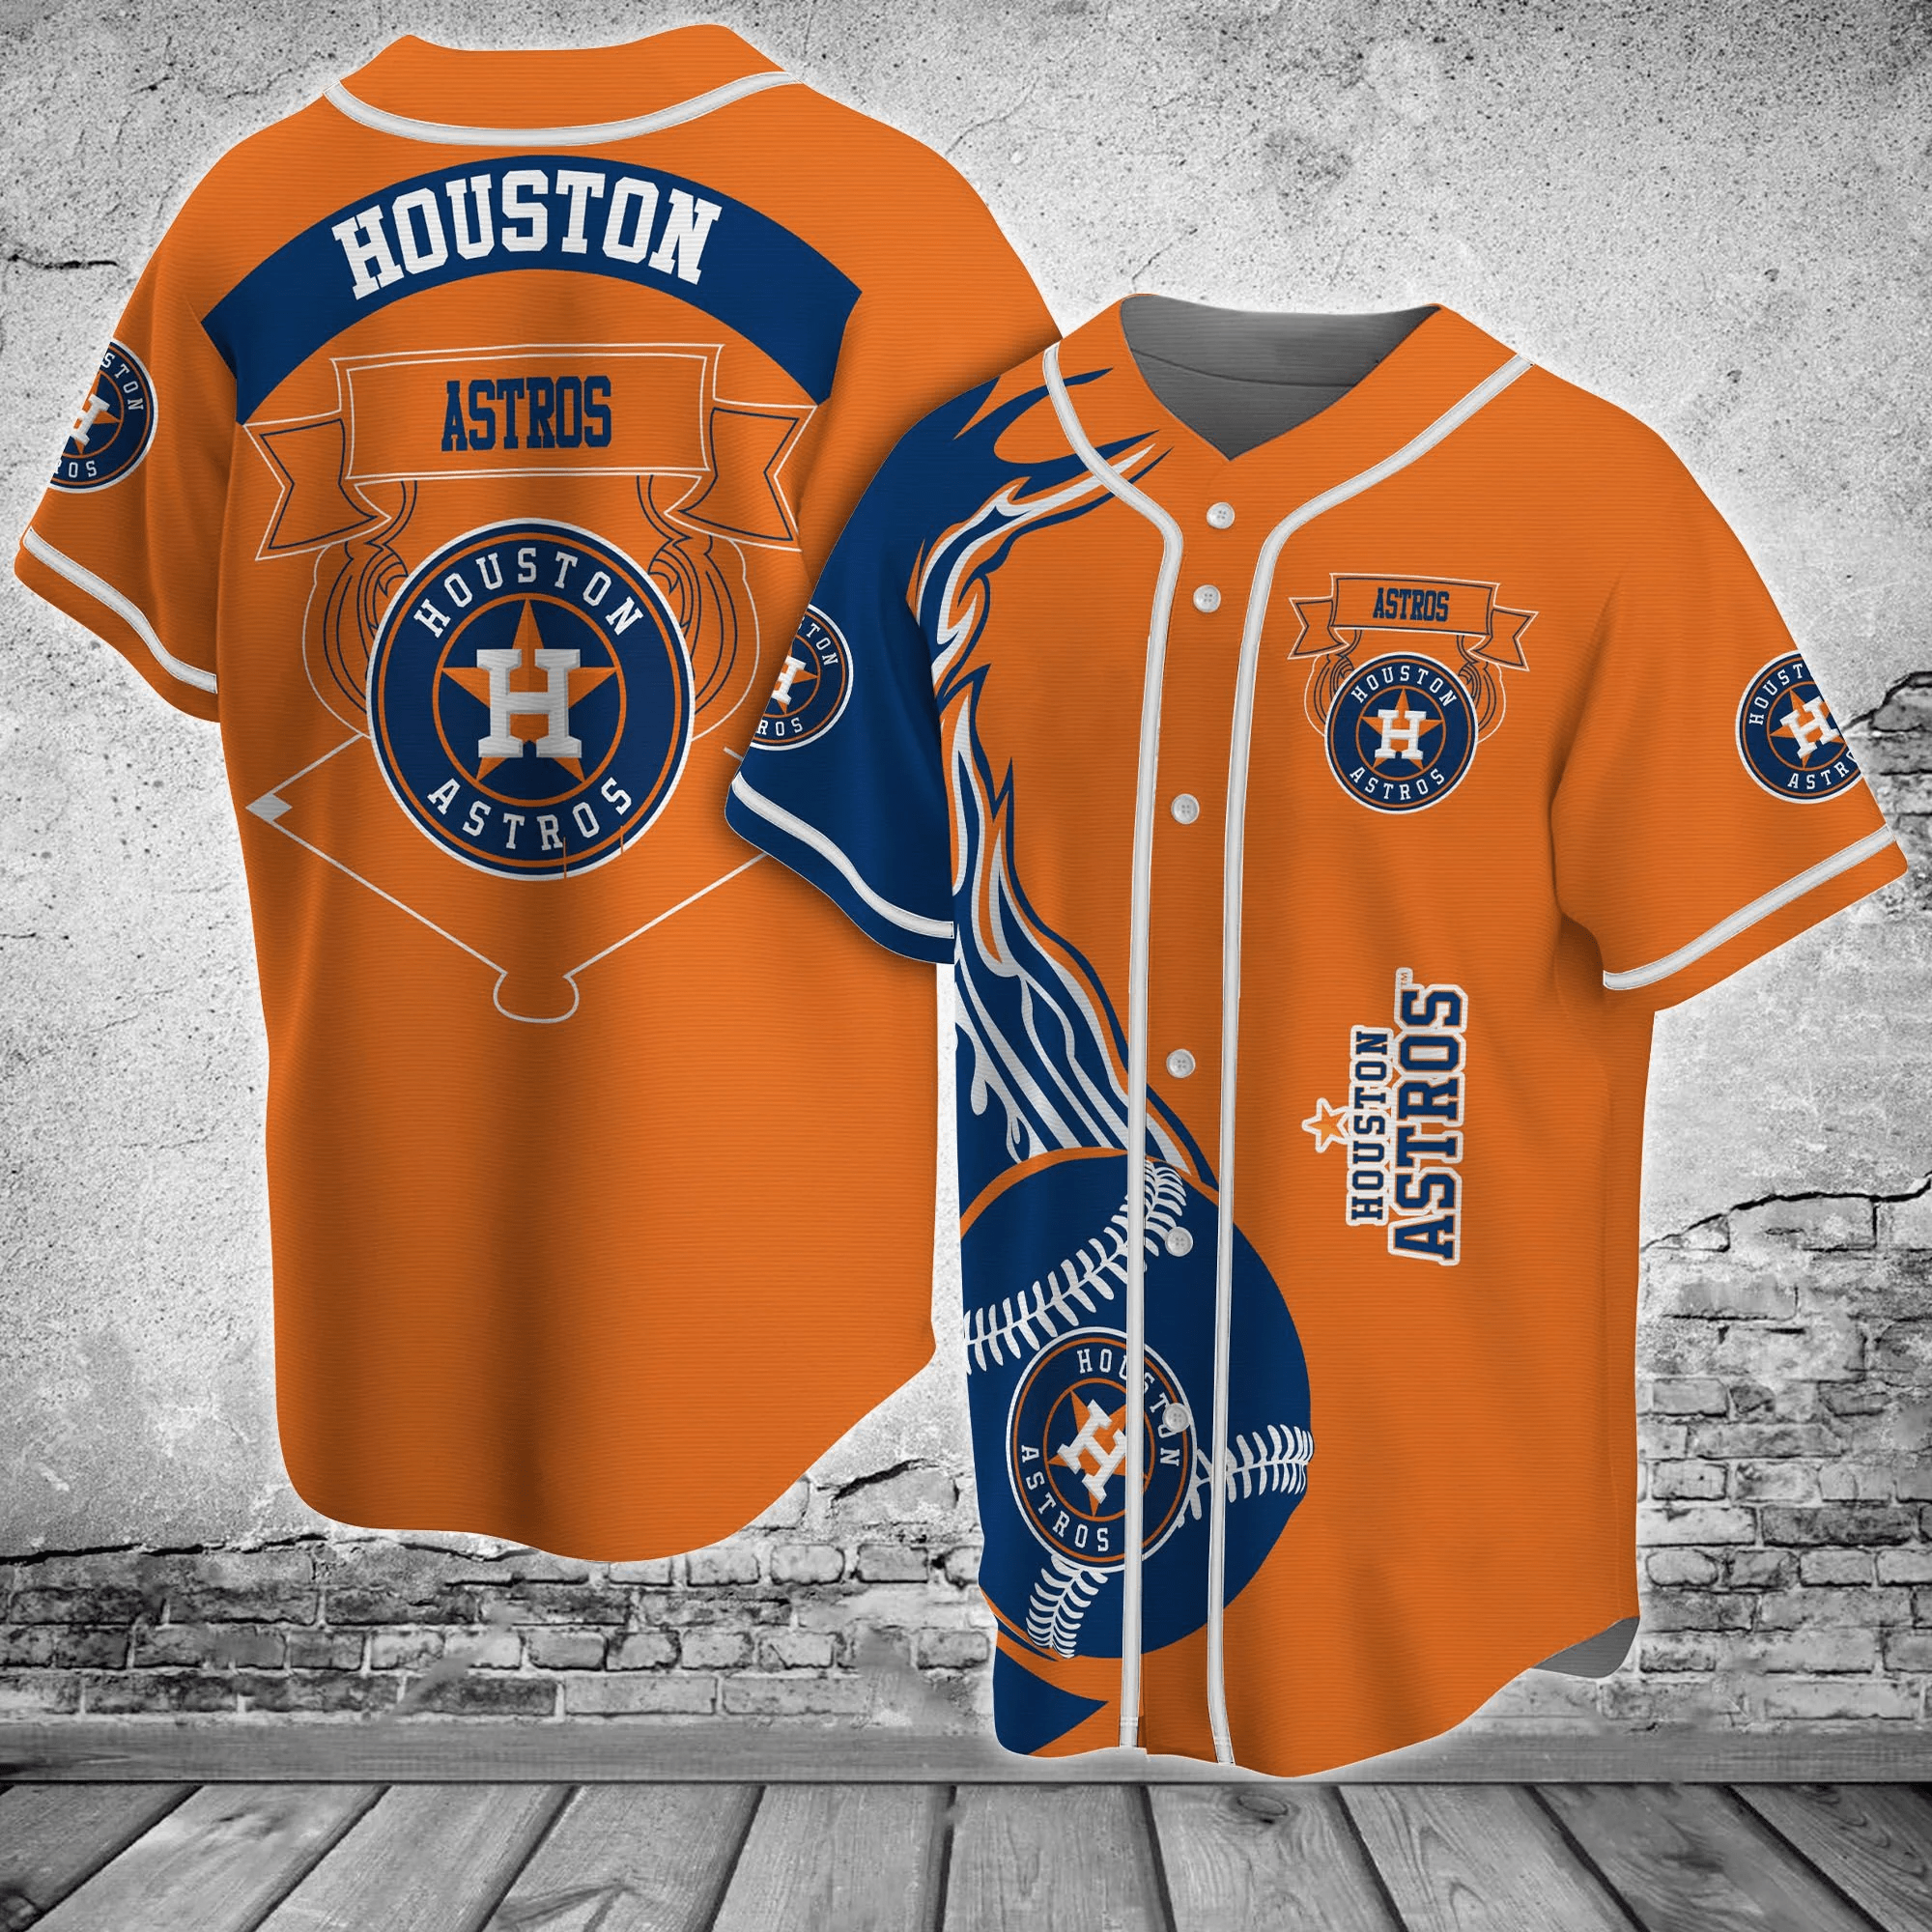 Houston Astros MLB Baseball Jersey Shirt Classic FVJ